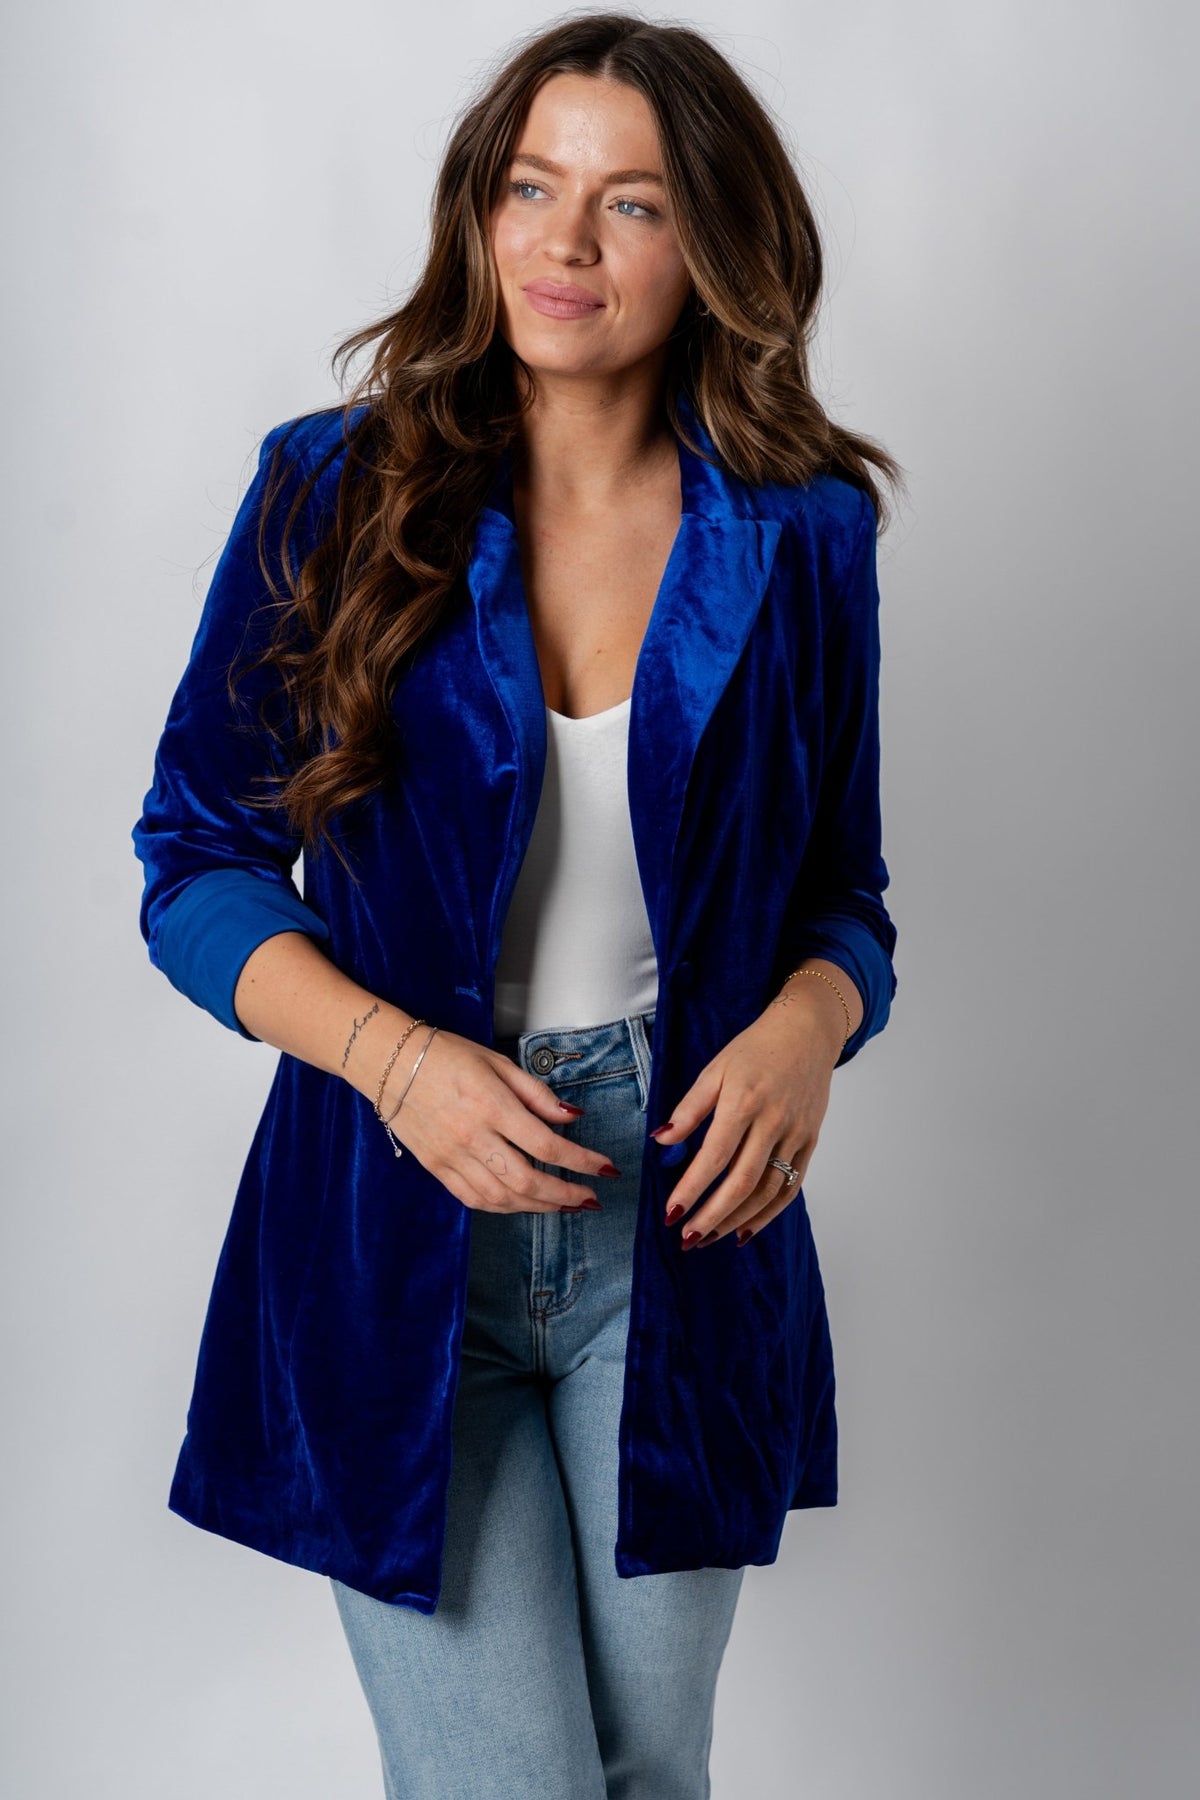 Velvet blazer royal – Trendy Jackets | Cute Fashion Blazers at Lush Fashion Lounge Boutique in Oklahoma City